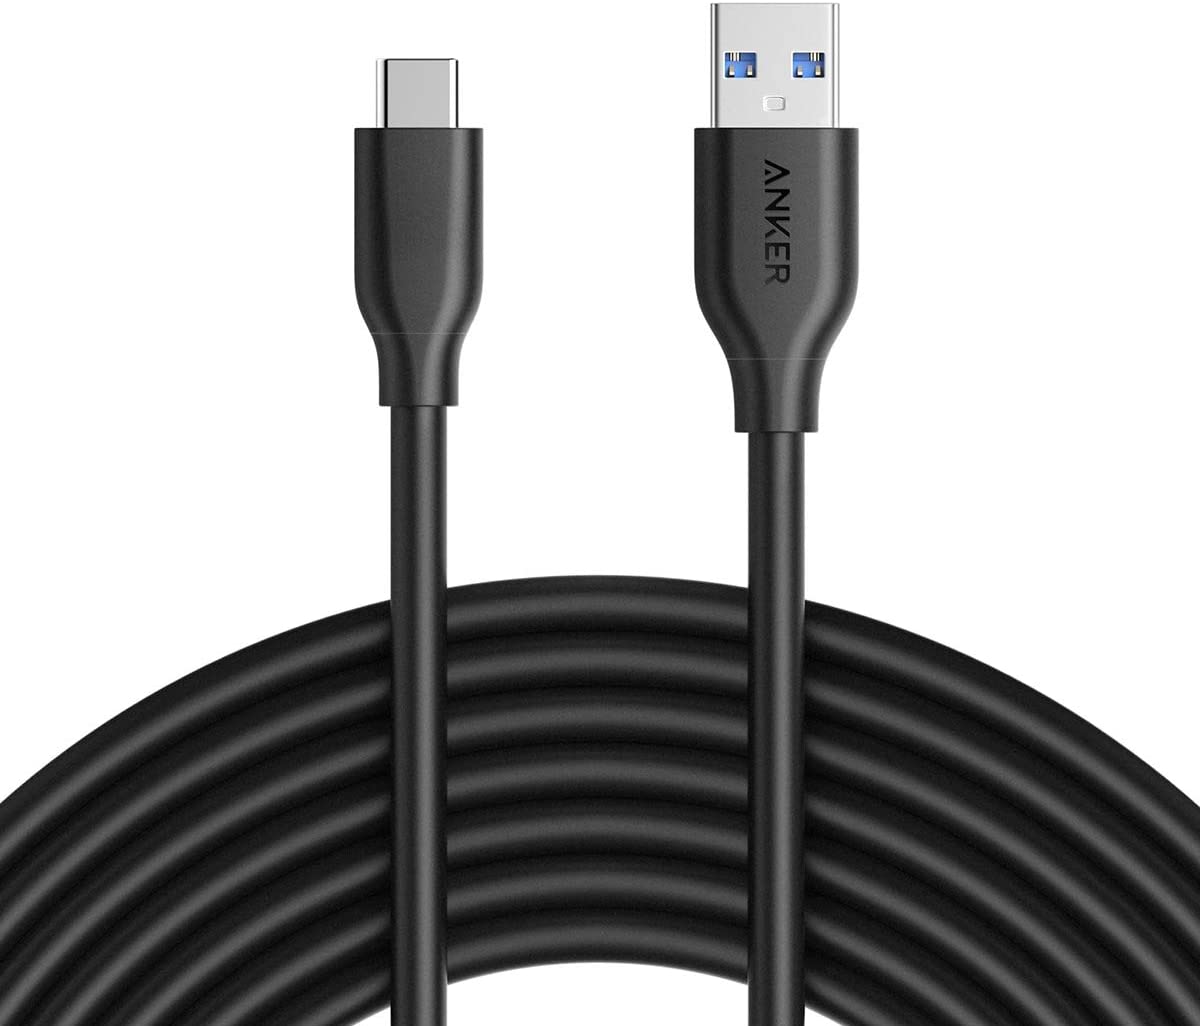 Anker USB Type C ケーブル PowerLine USB-C USB-A 人気上昇中 3.0 Oculus link Xperia 3.0m 国内在庫 MacBook Quest 等 iPad USB-C機器対応 その他 LG Android Pro Galaxy